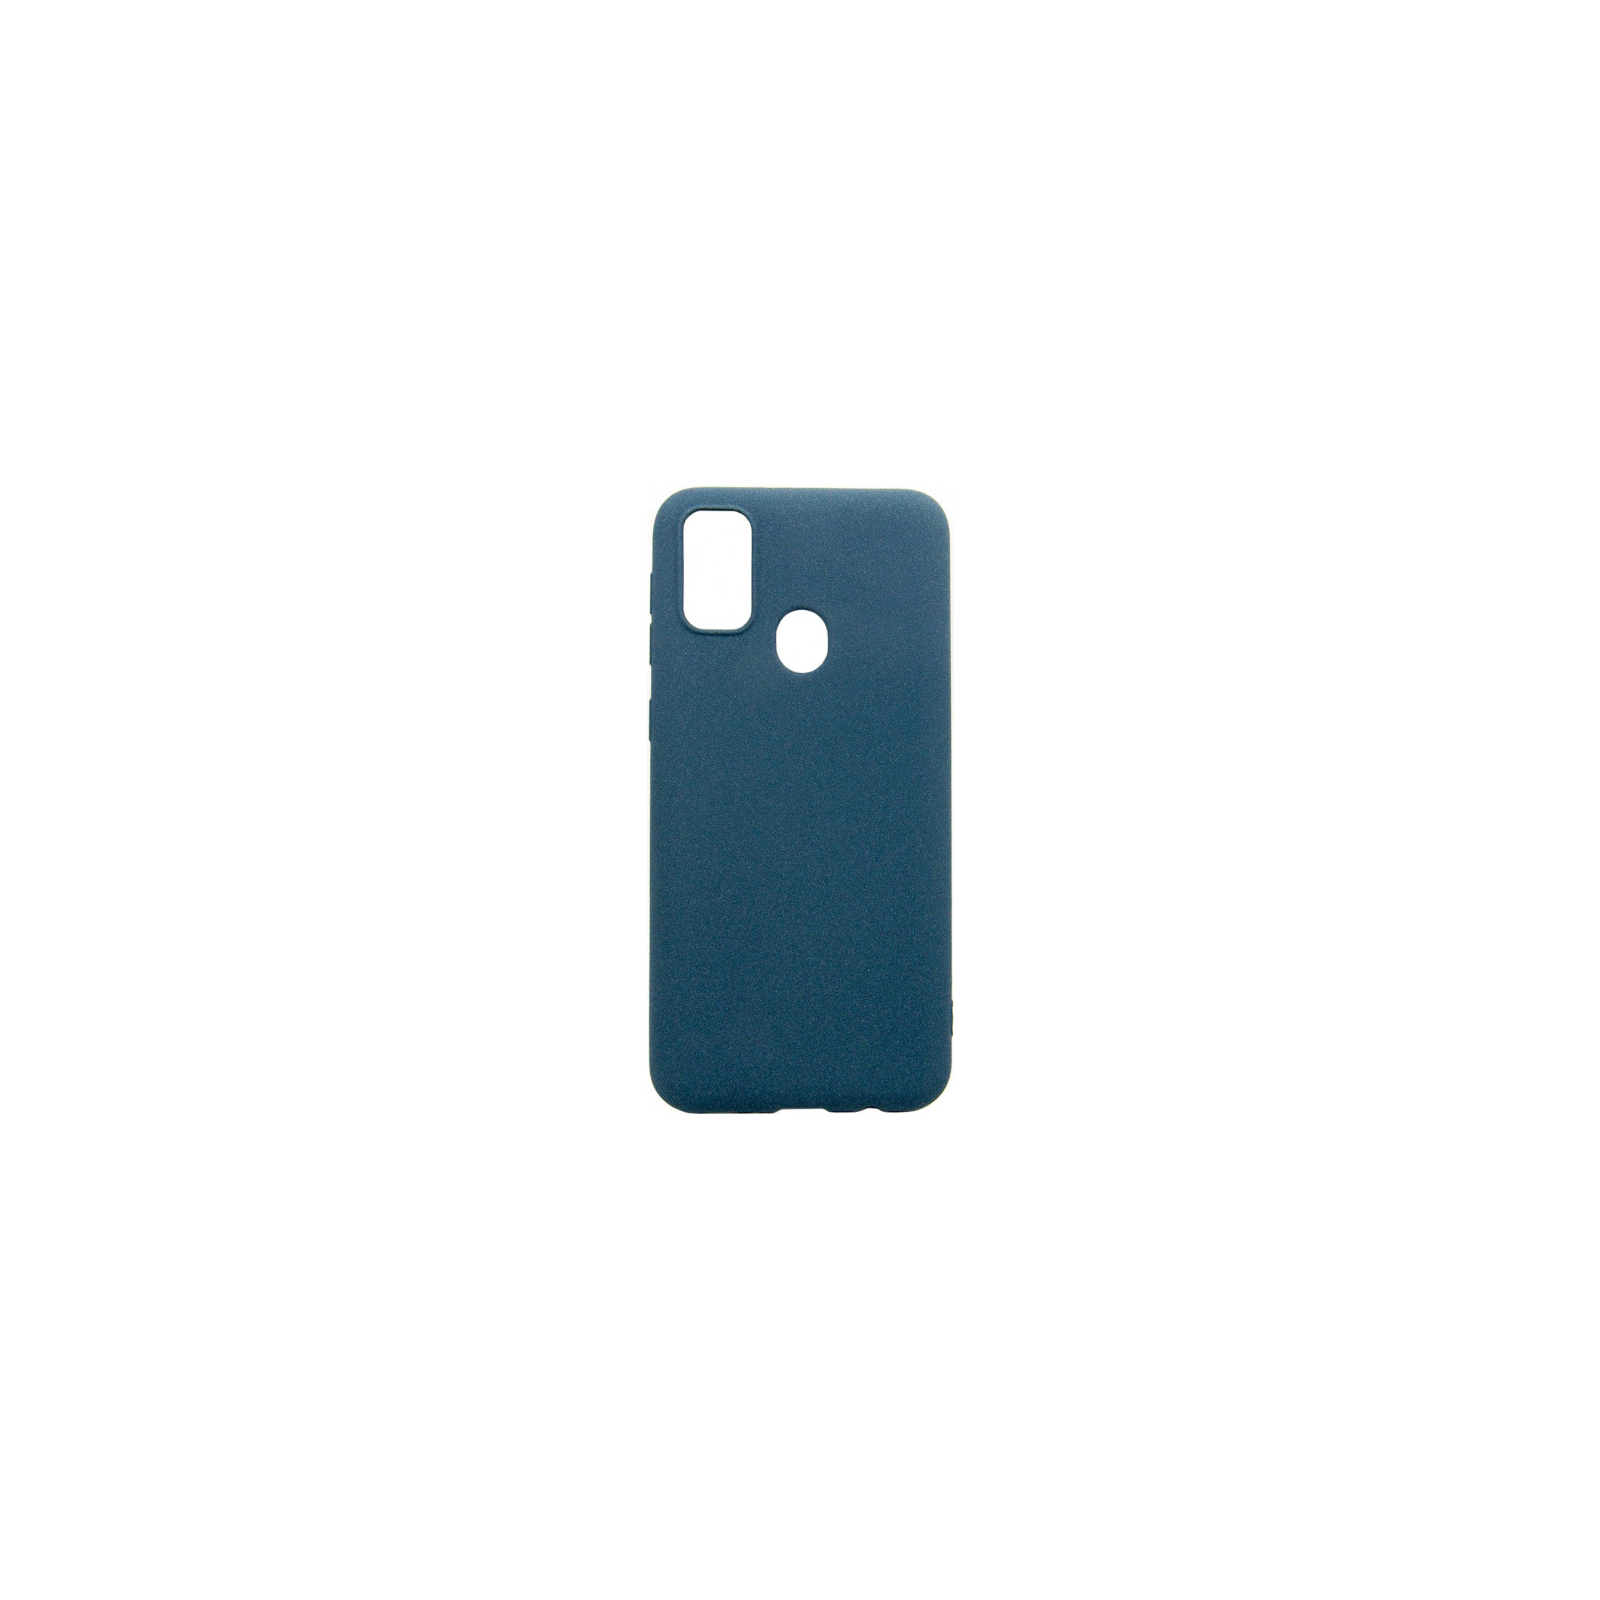 Чехол для мобильного телефона Dengos Carbon Samsung Galaxy M31, black (DG-TPU-CRBN-58) (DG-TPU-CRBN-58)